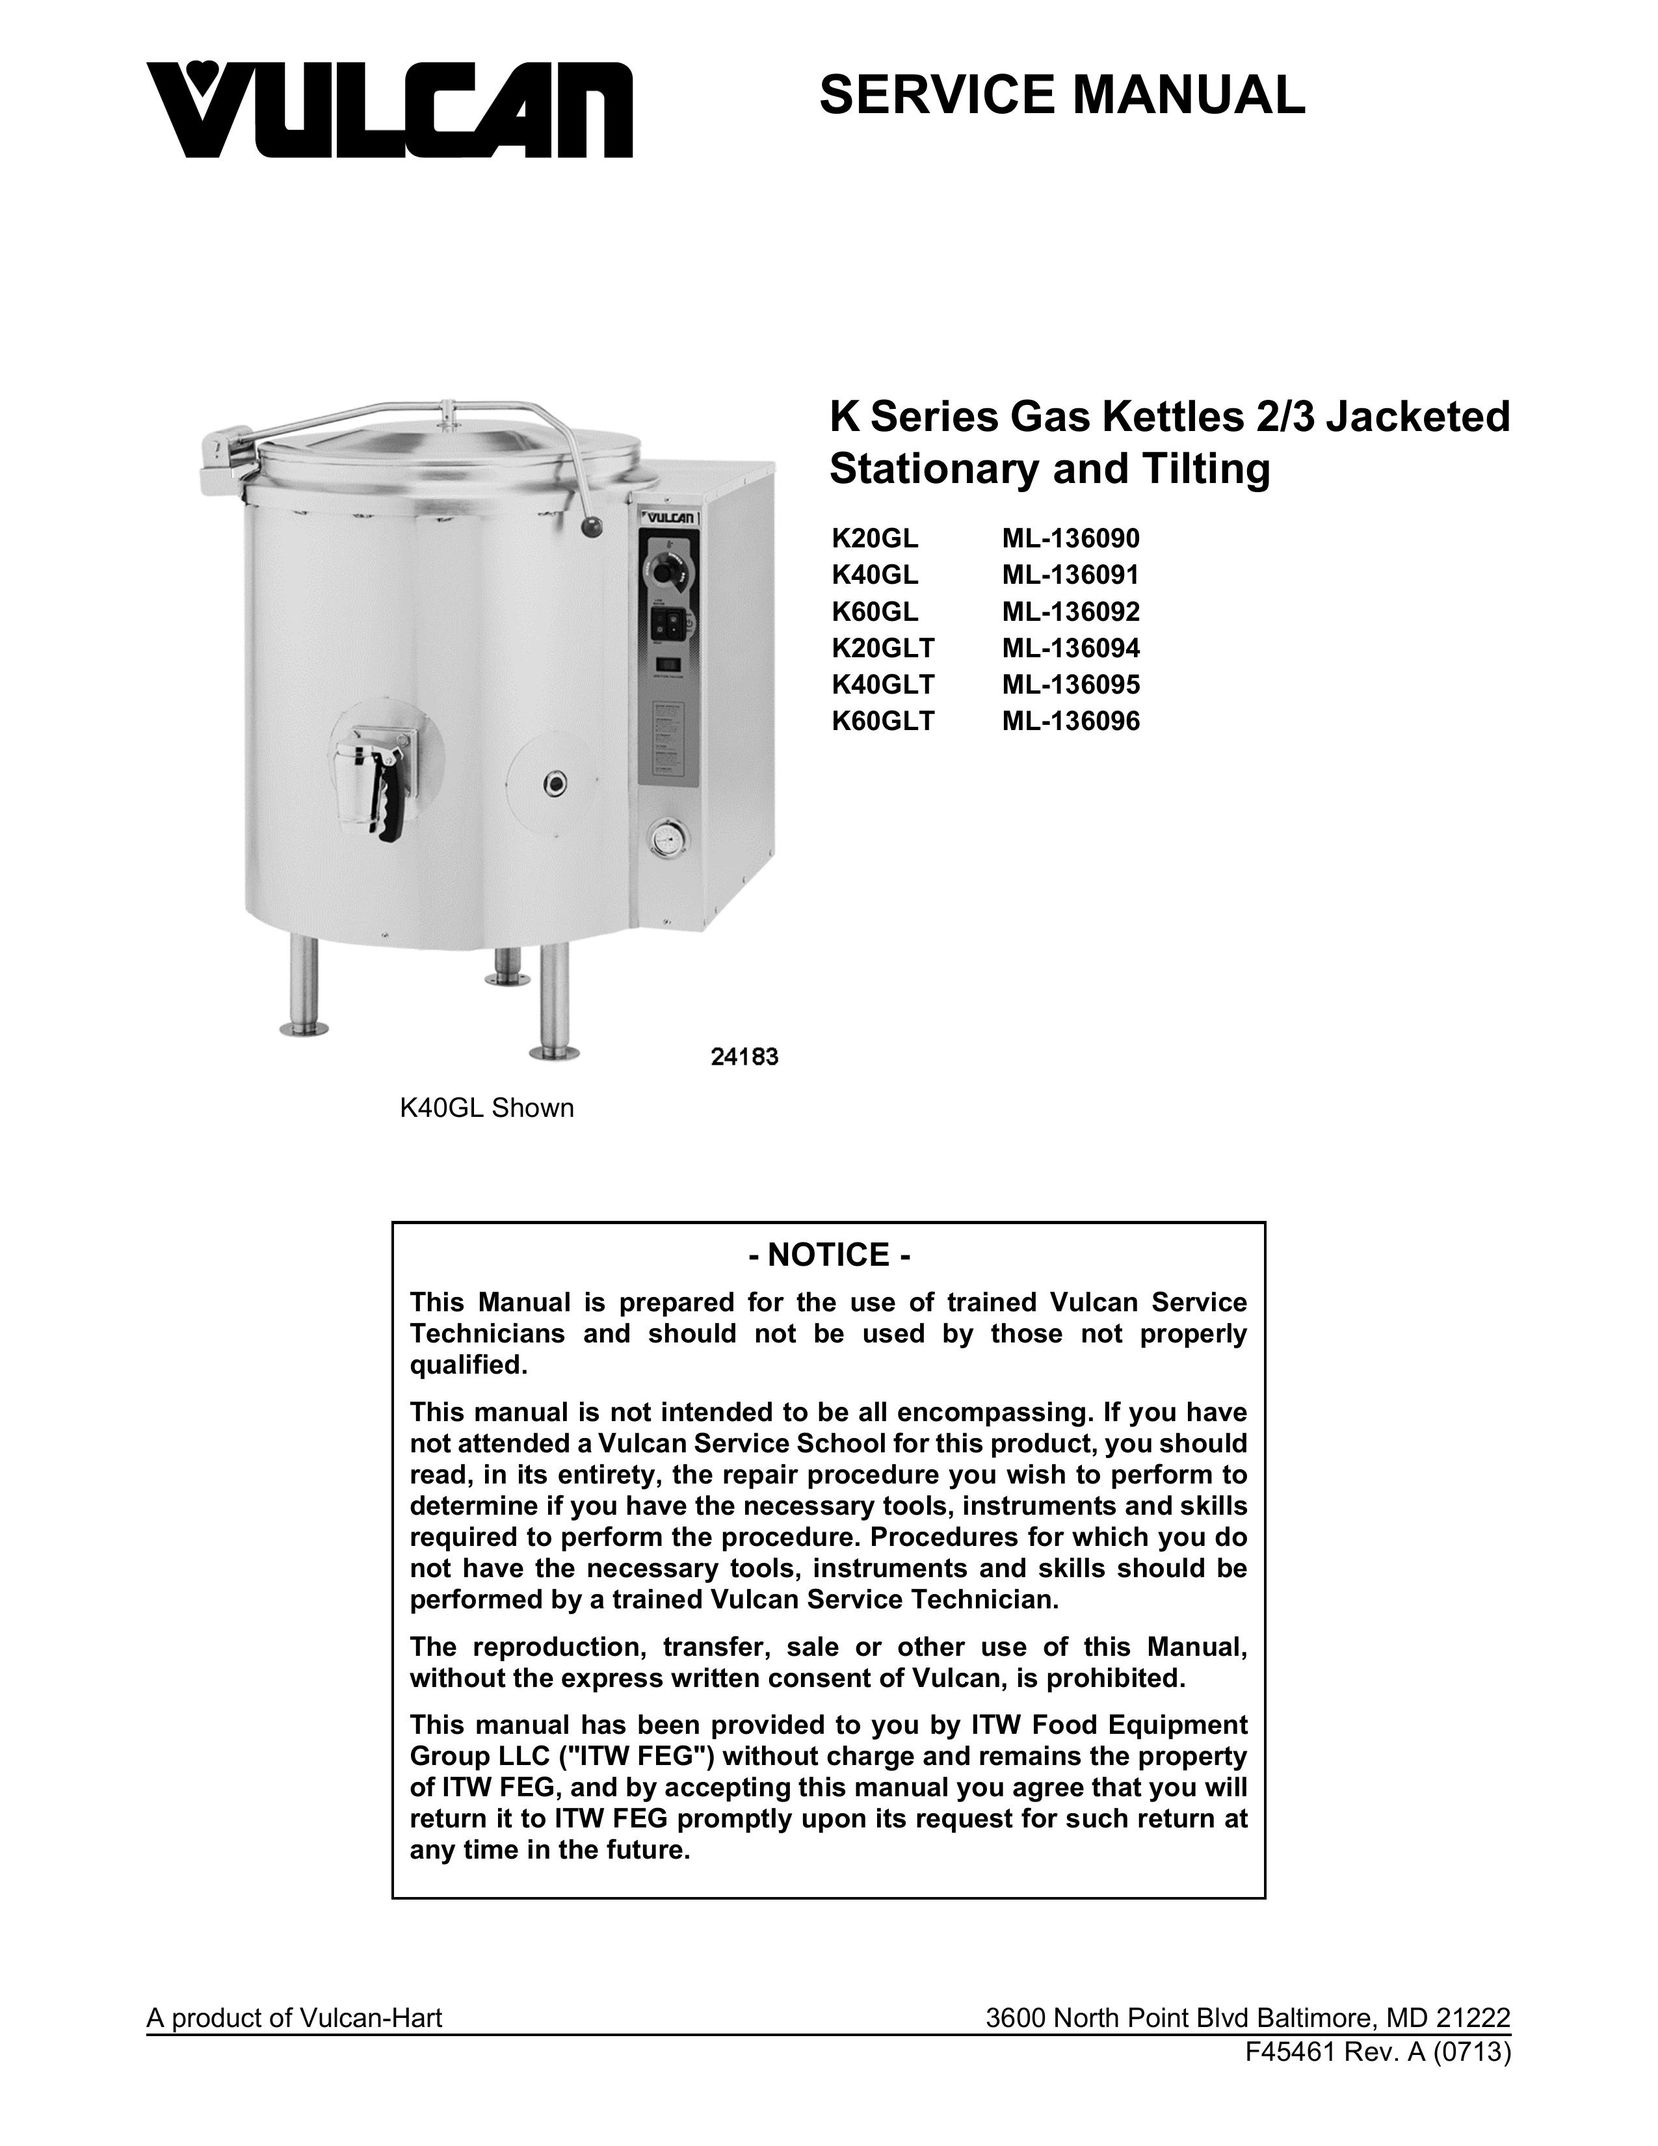 Vulcan-Hart k20GLT Hot Beverage Maker User Manual